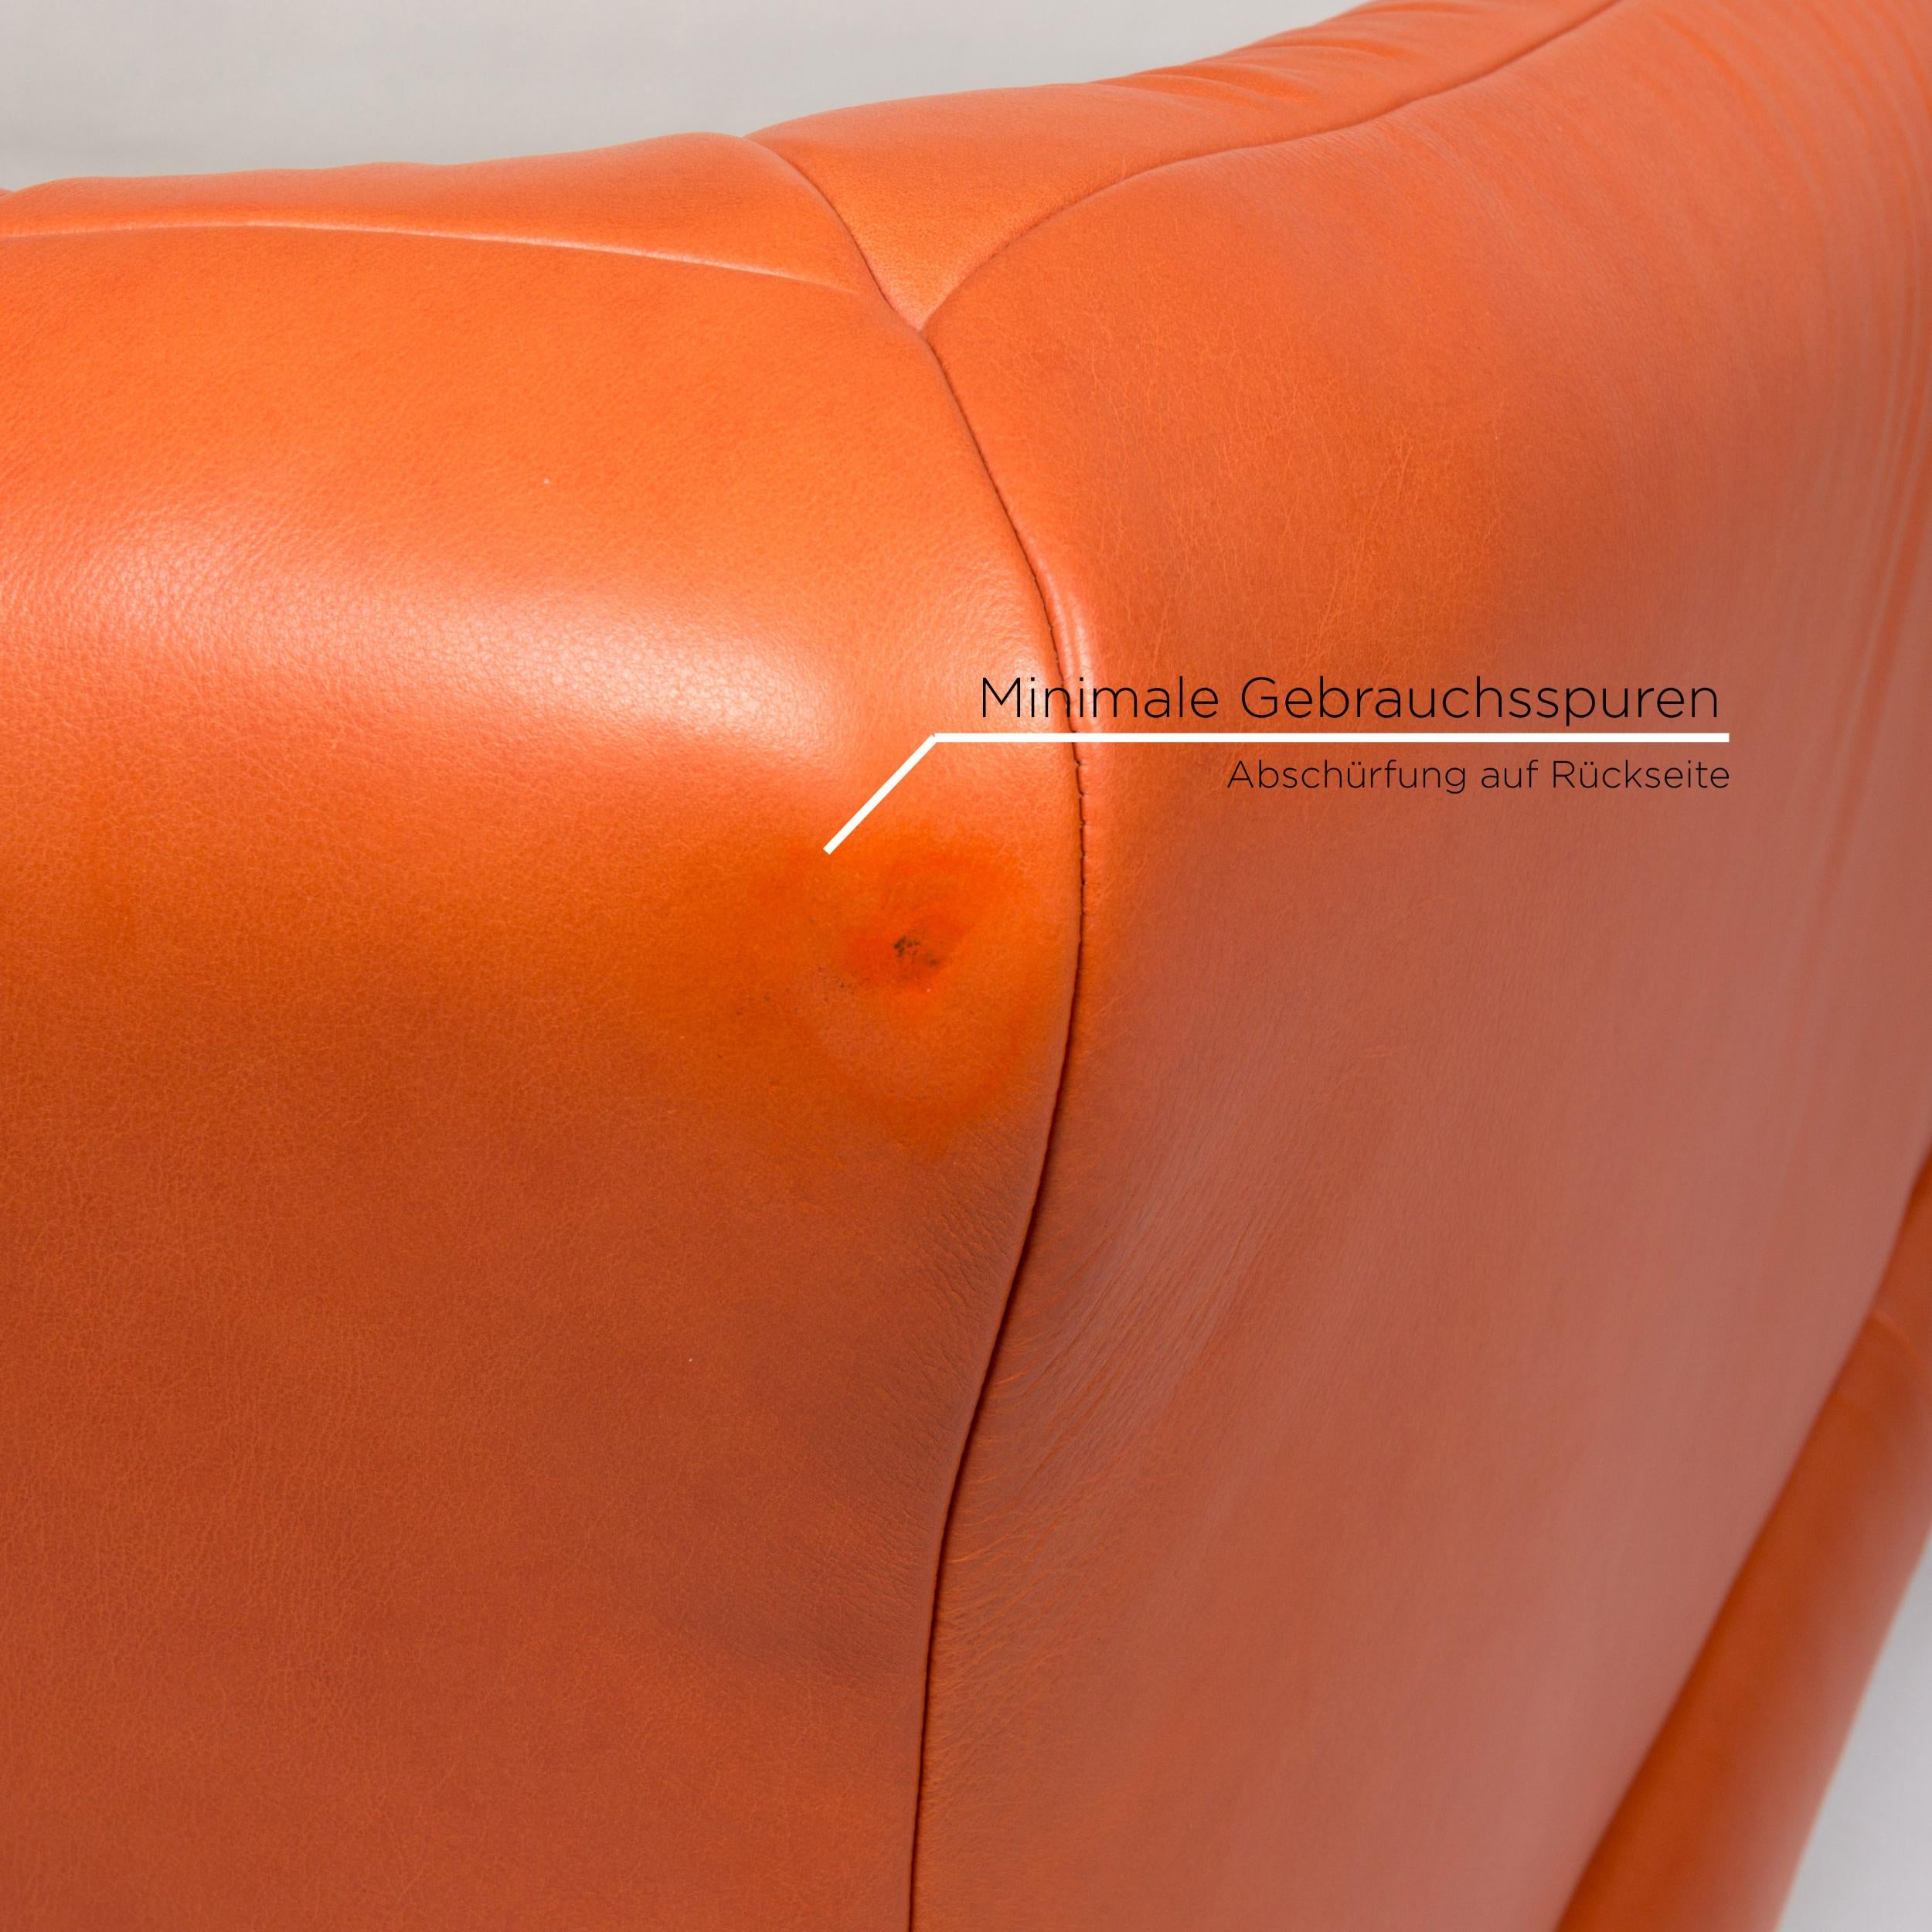 German Koinor Rossini Leather Corner Sofa Terracotta Orange Sofa Function Couch